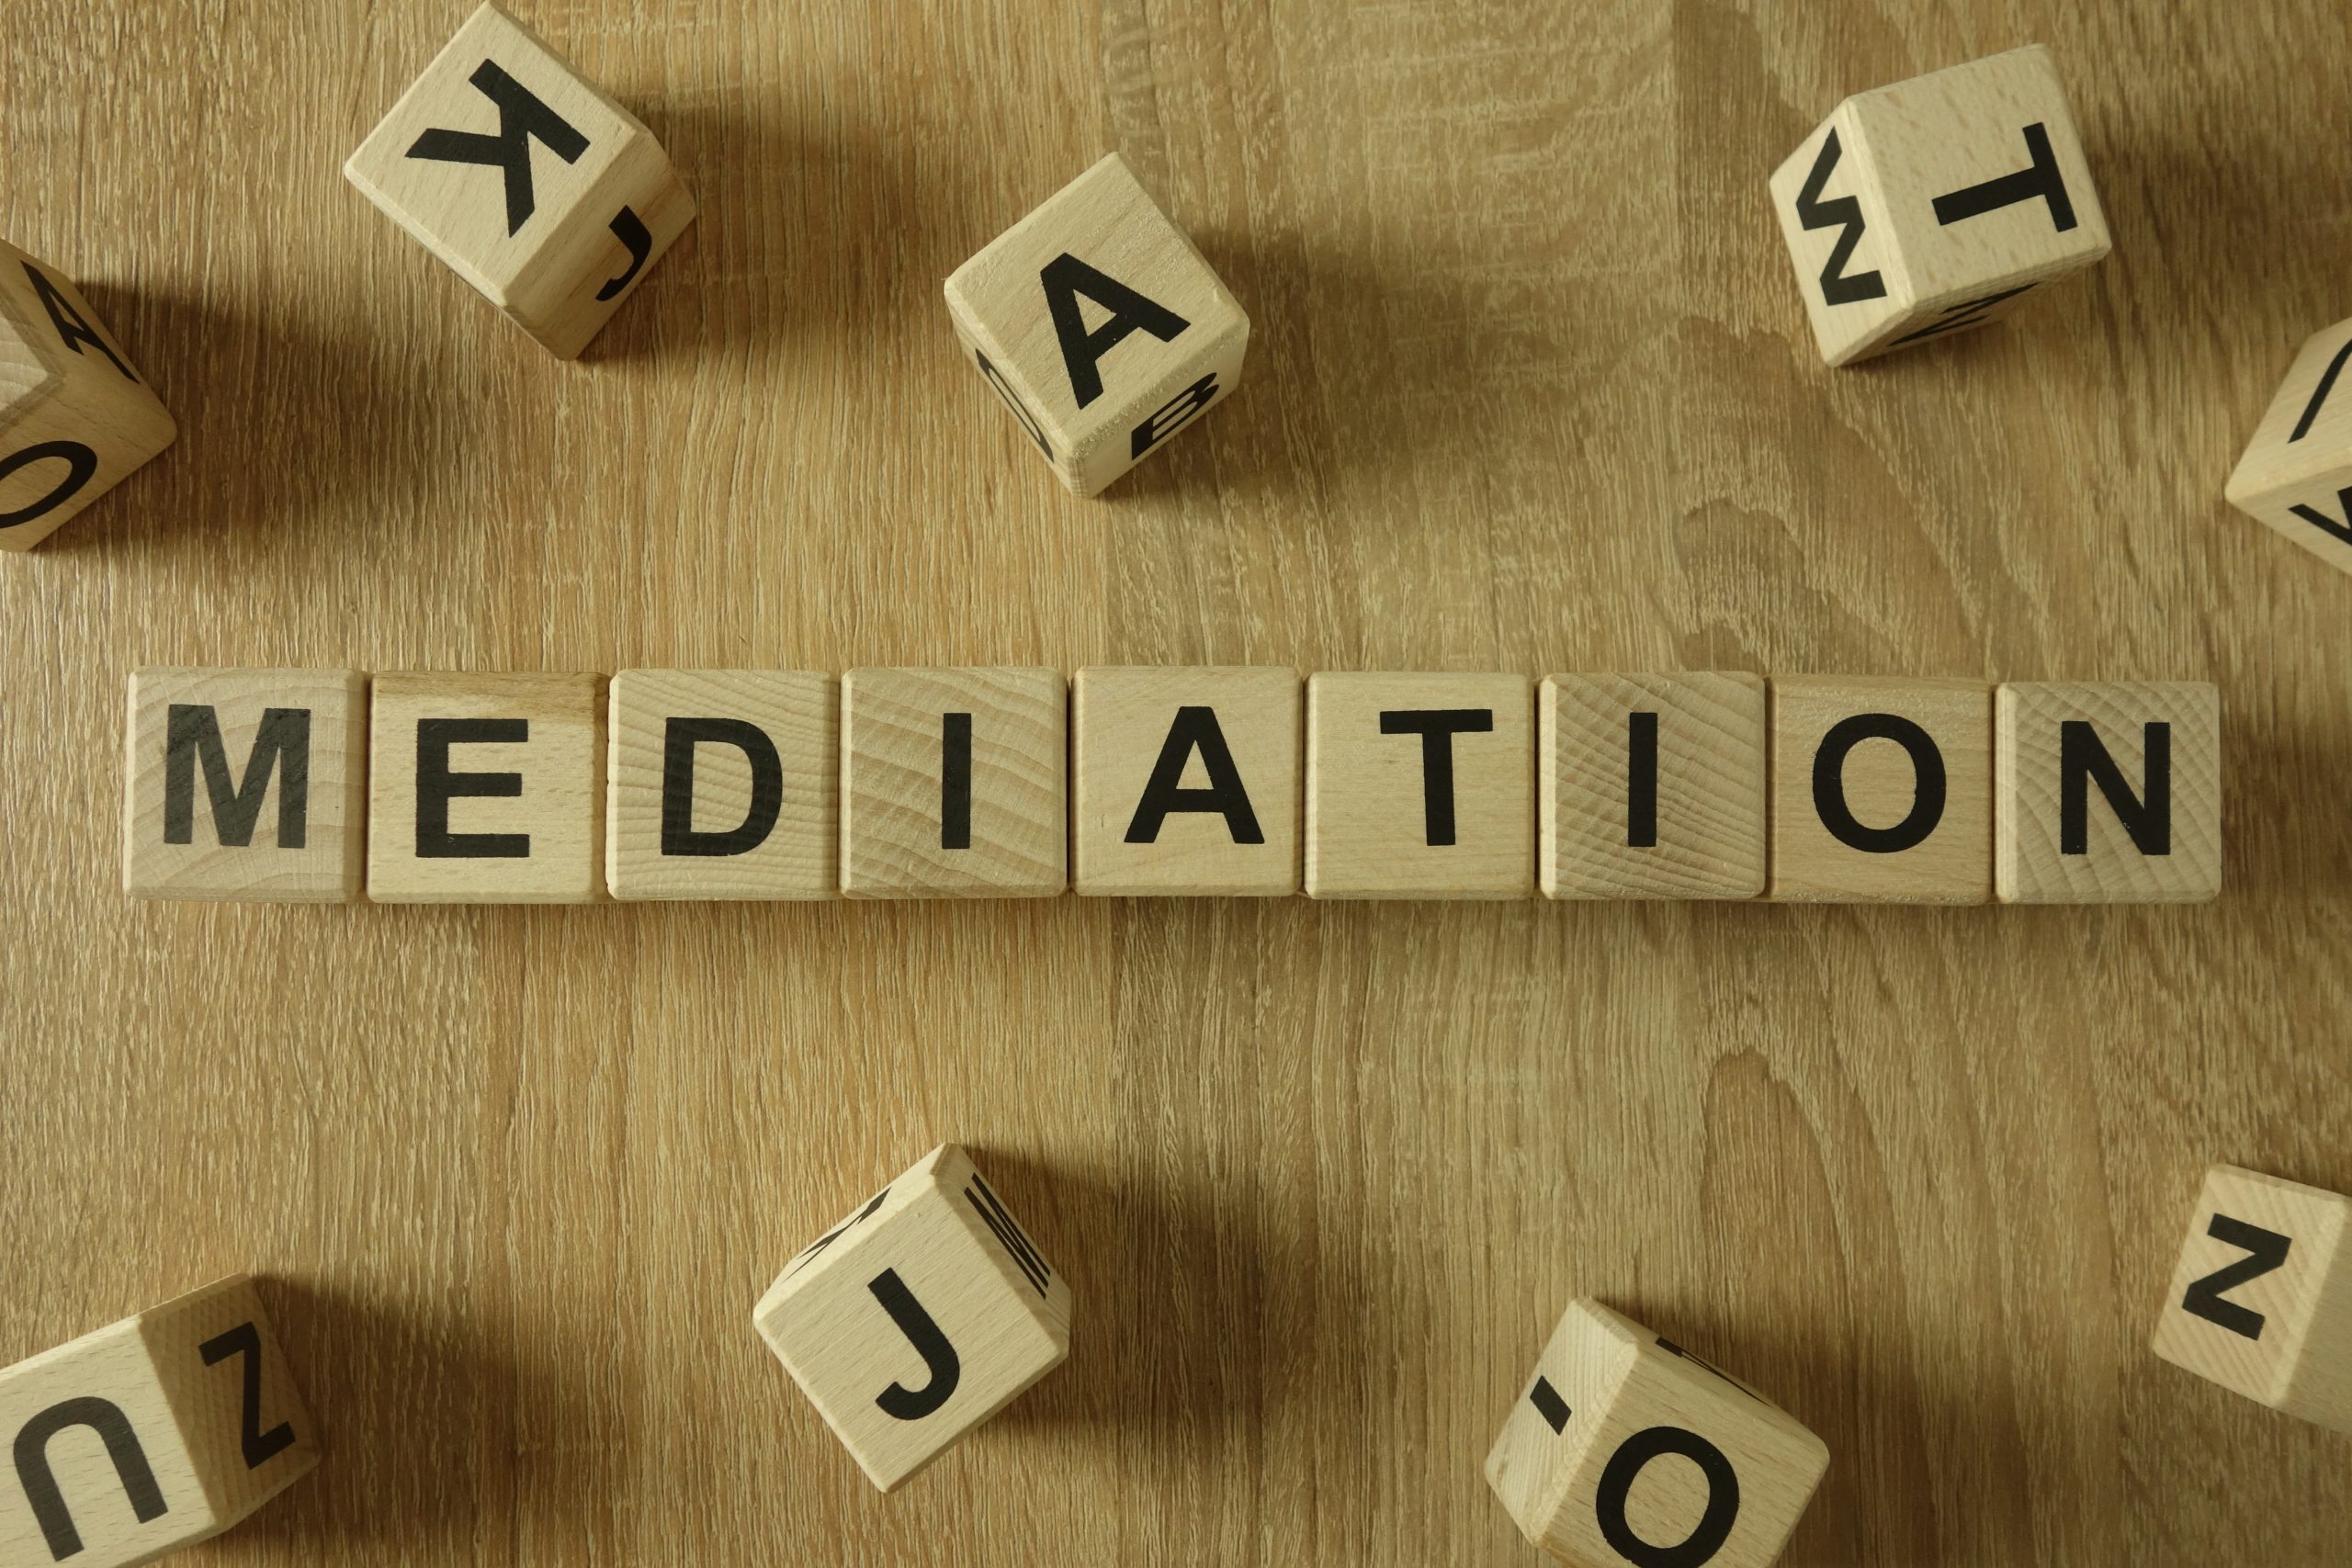 Mediation word from wooden blocks on desk